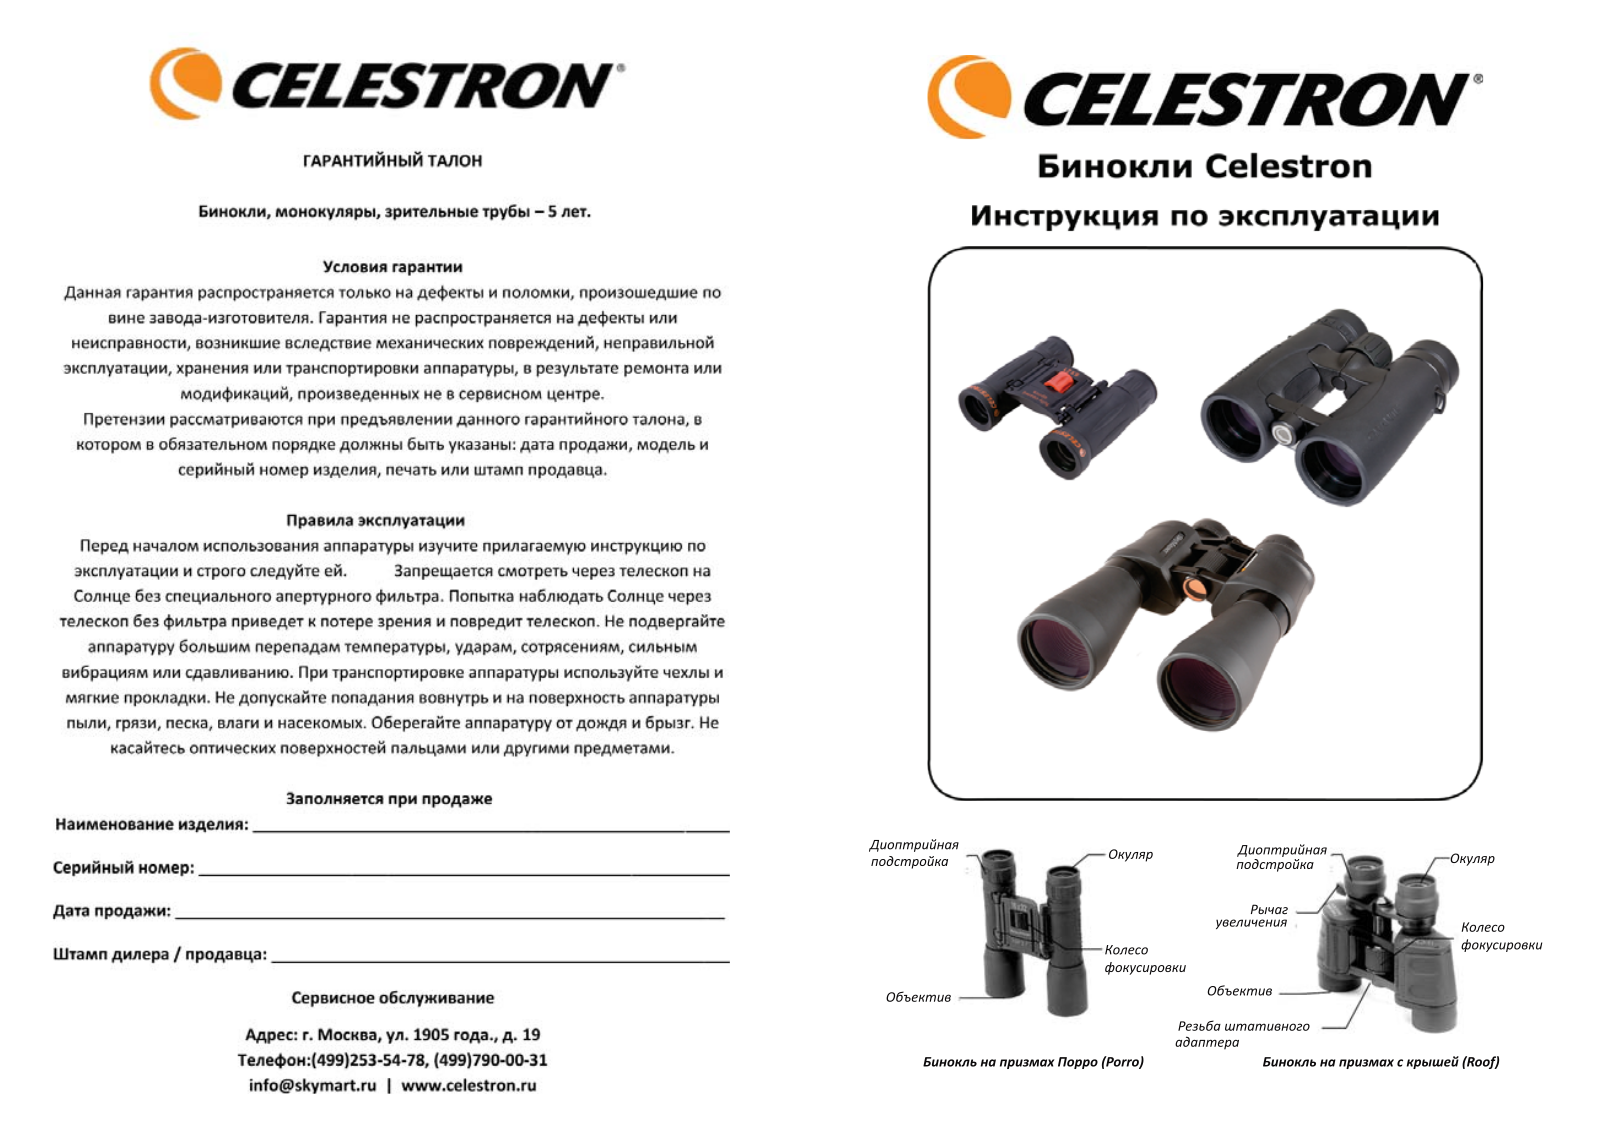 Celestron SkyMaster User Manual